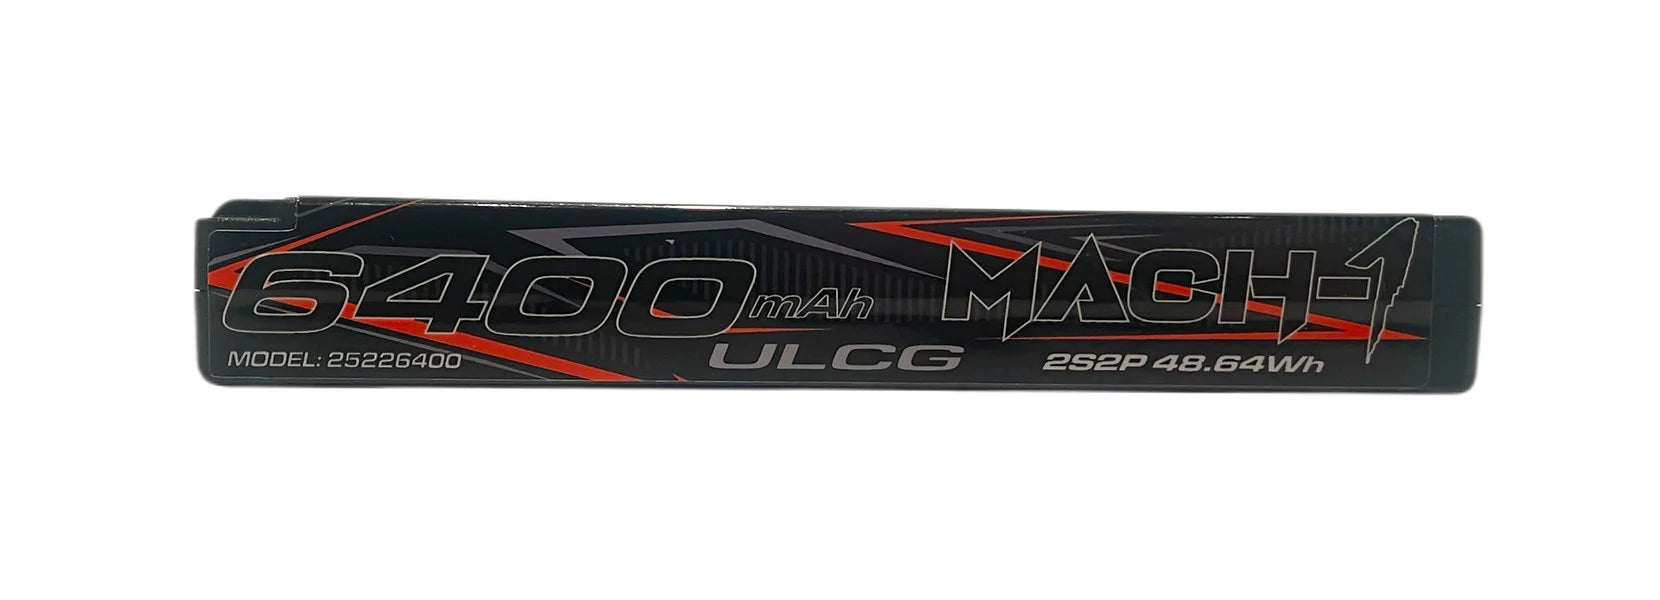 Mach-1 Racing 6400mah 2S ULCG stick pack. 140C/280C HV 5mm Bullets - [Sunshine-Coast] - Techtonic Hobbies - [RC-Car] - [Scale-Model]